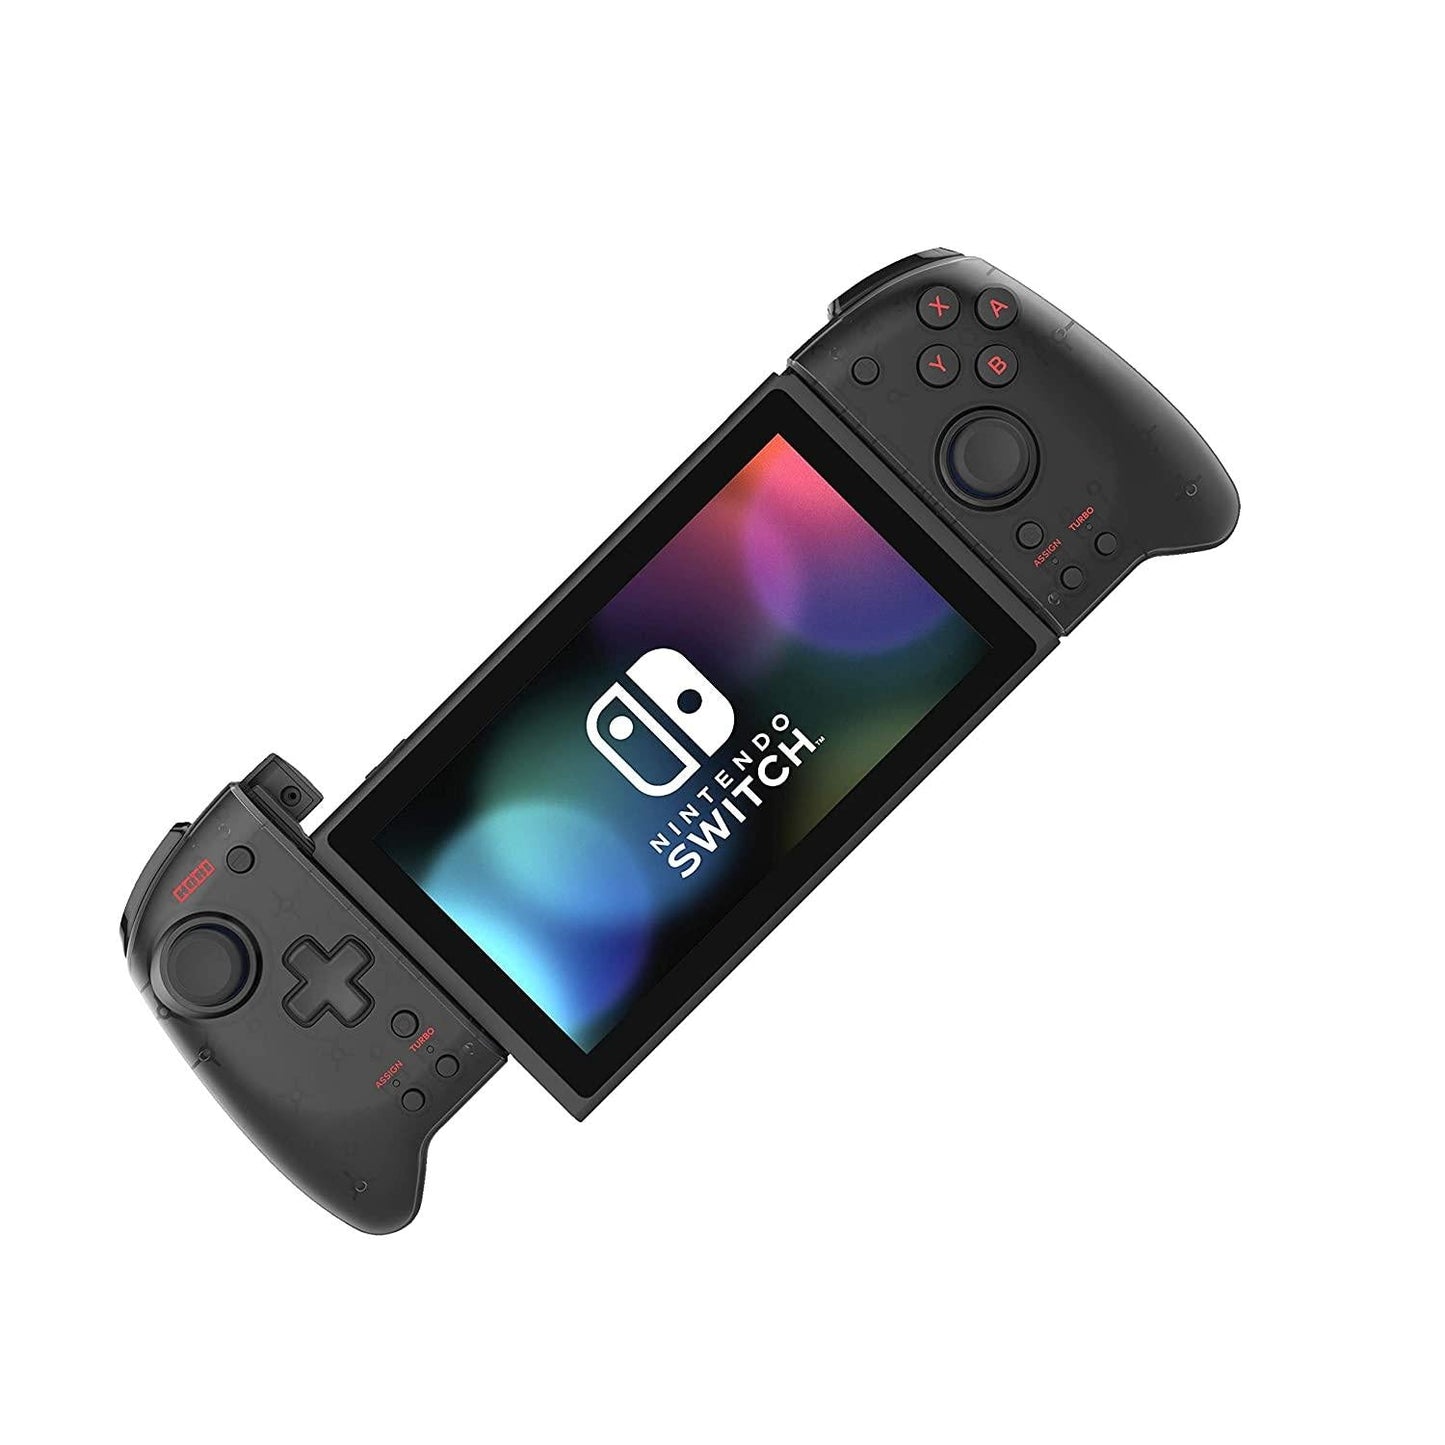 Hori Nintendo Switch Split Pad Pro (Black) Ergonomic Controller for Handheld Mode - Officially Licensed - Store For Gamers